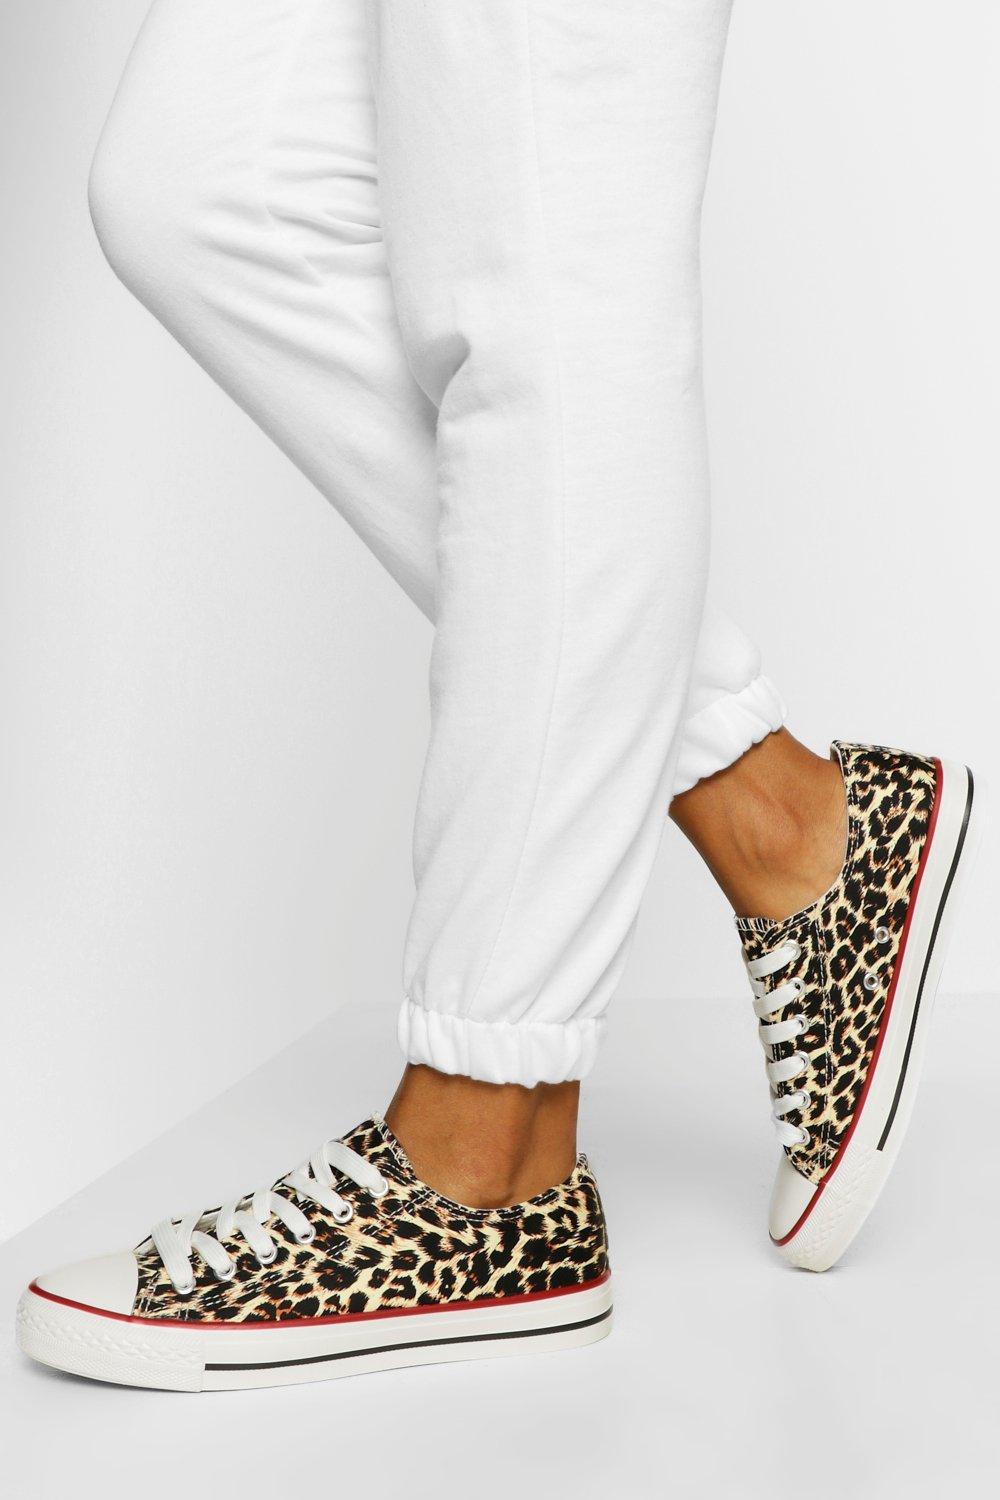 boohoo leopard print shoes